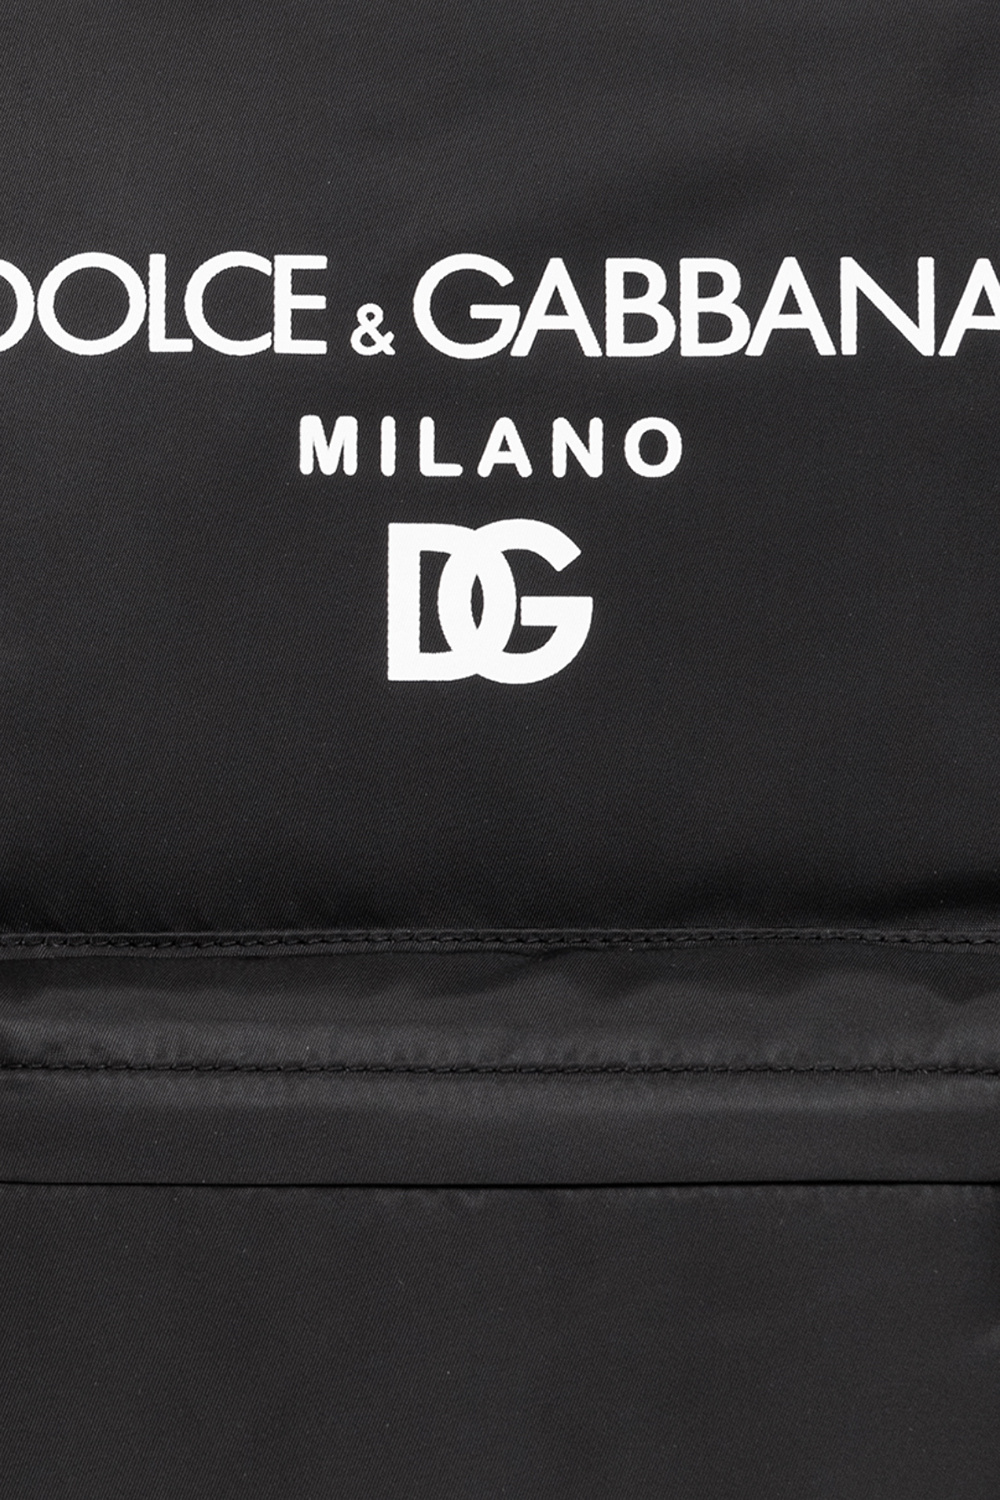 Dolce & Gabbana Kids Emily Blunt wearing a black Dolce & Gabbana baroque print suit with Jimmy Choo heels